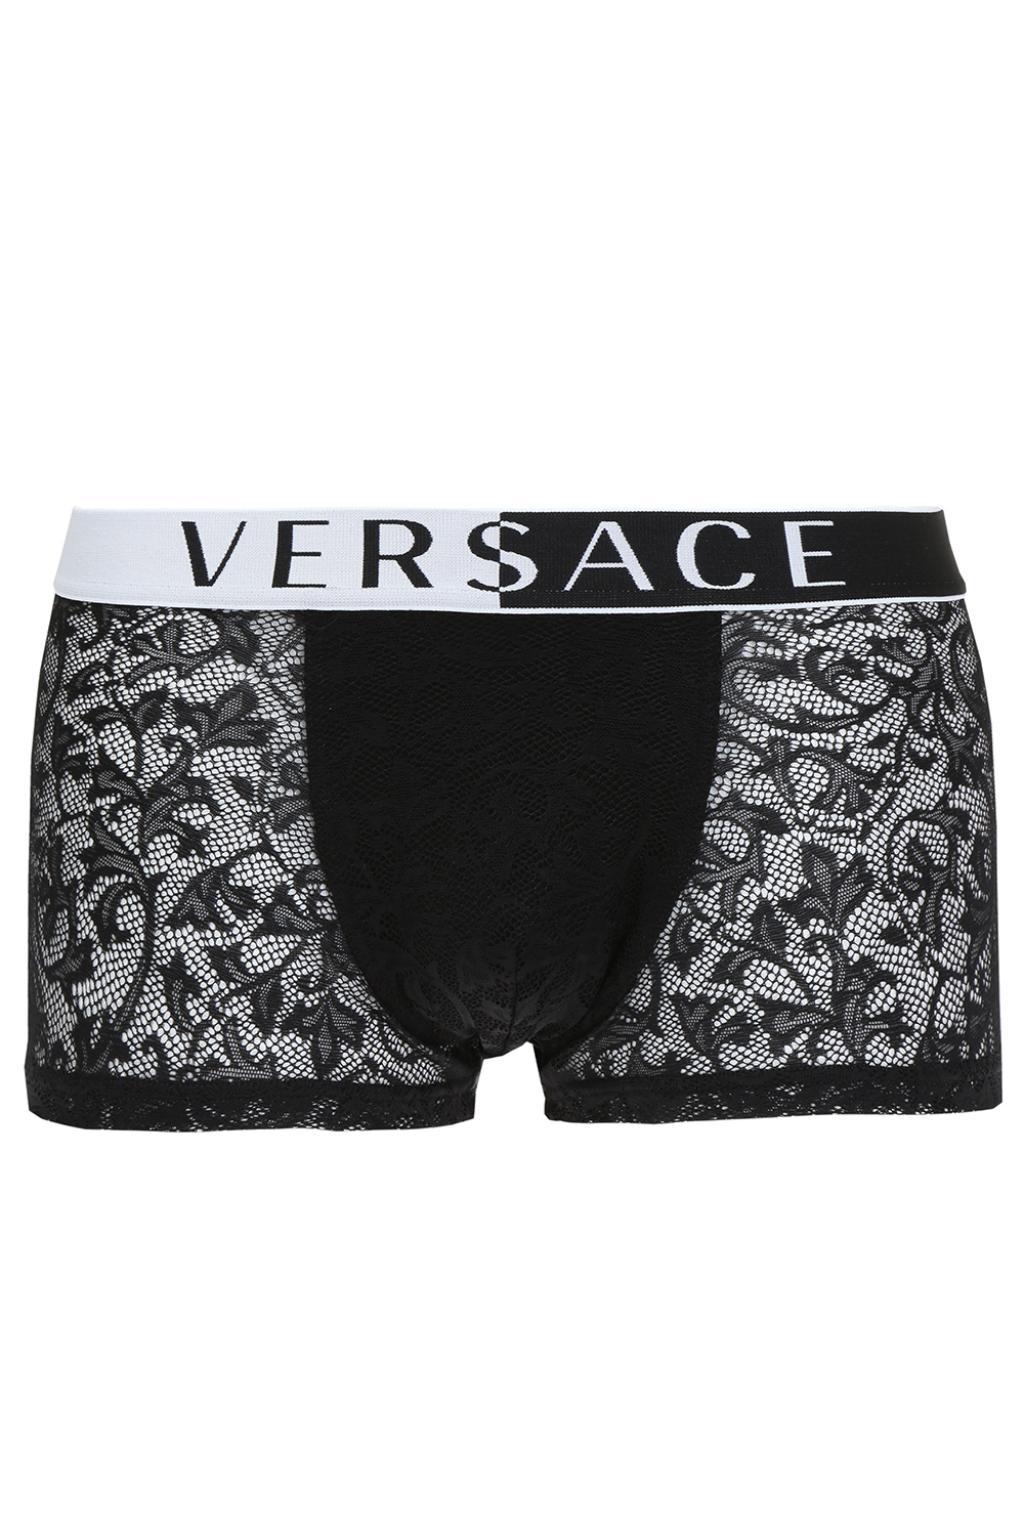 versace mens lace underwear